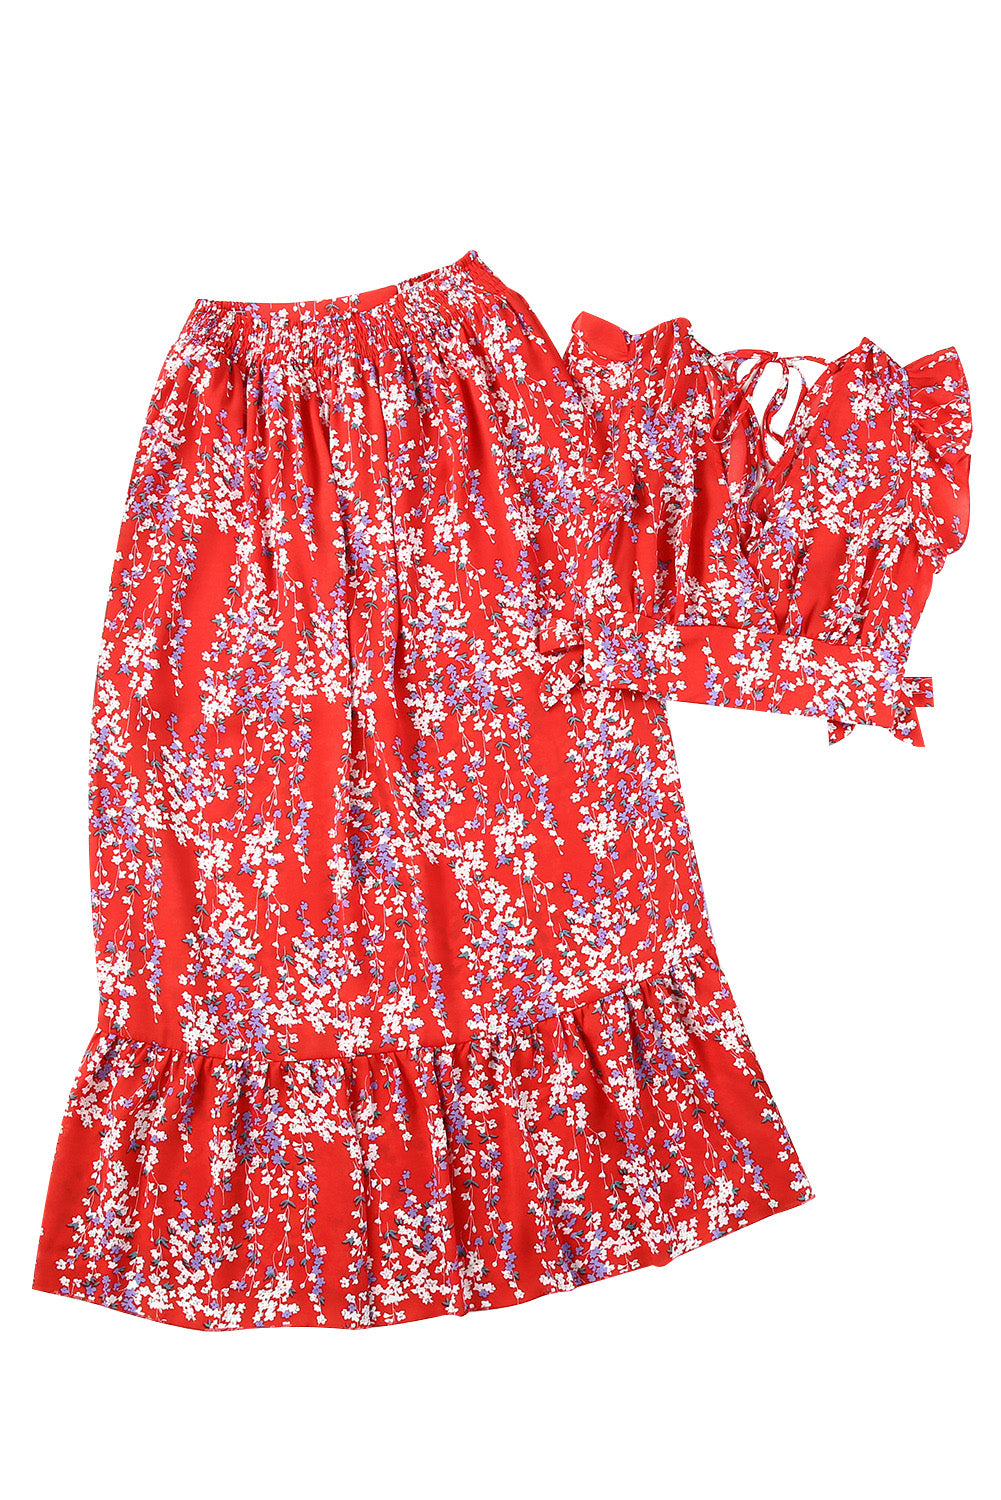 Vibrant Red Floral Crop Top Maxi Skirt Set